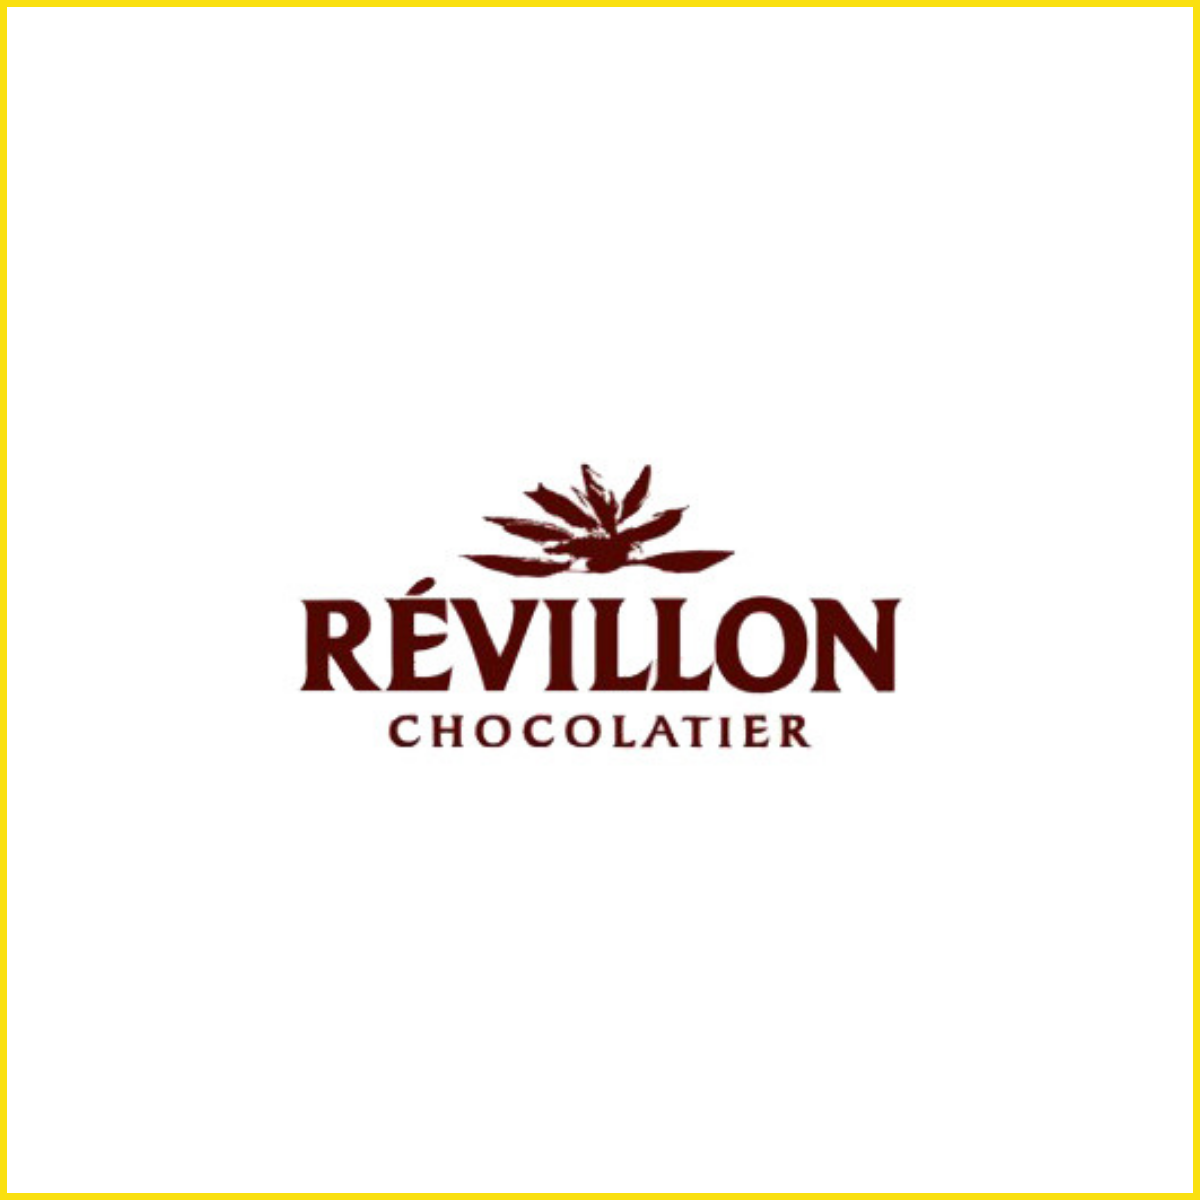 Révillon Chocolatier - Metrixx